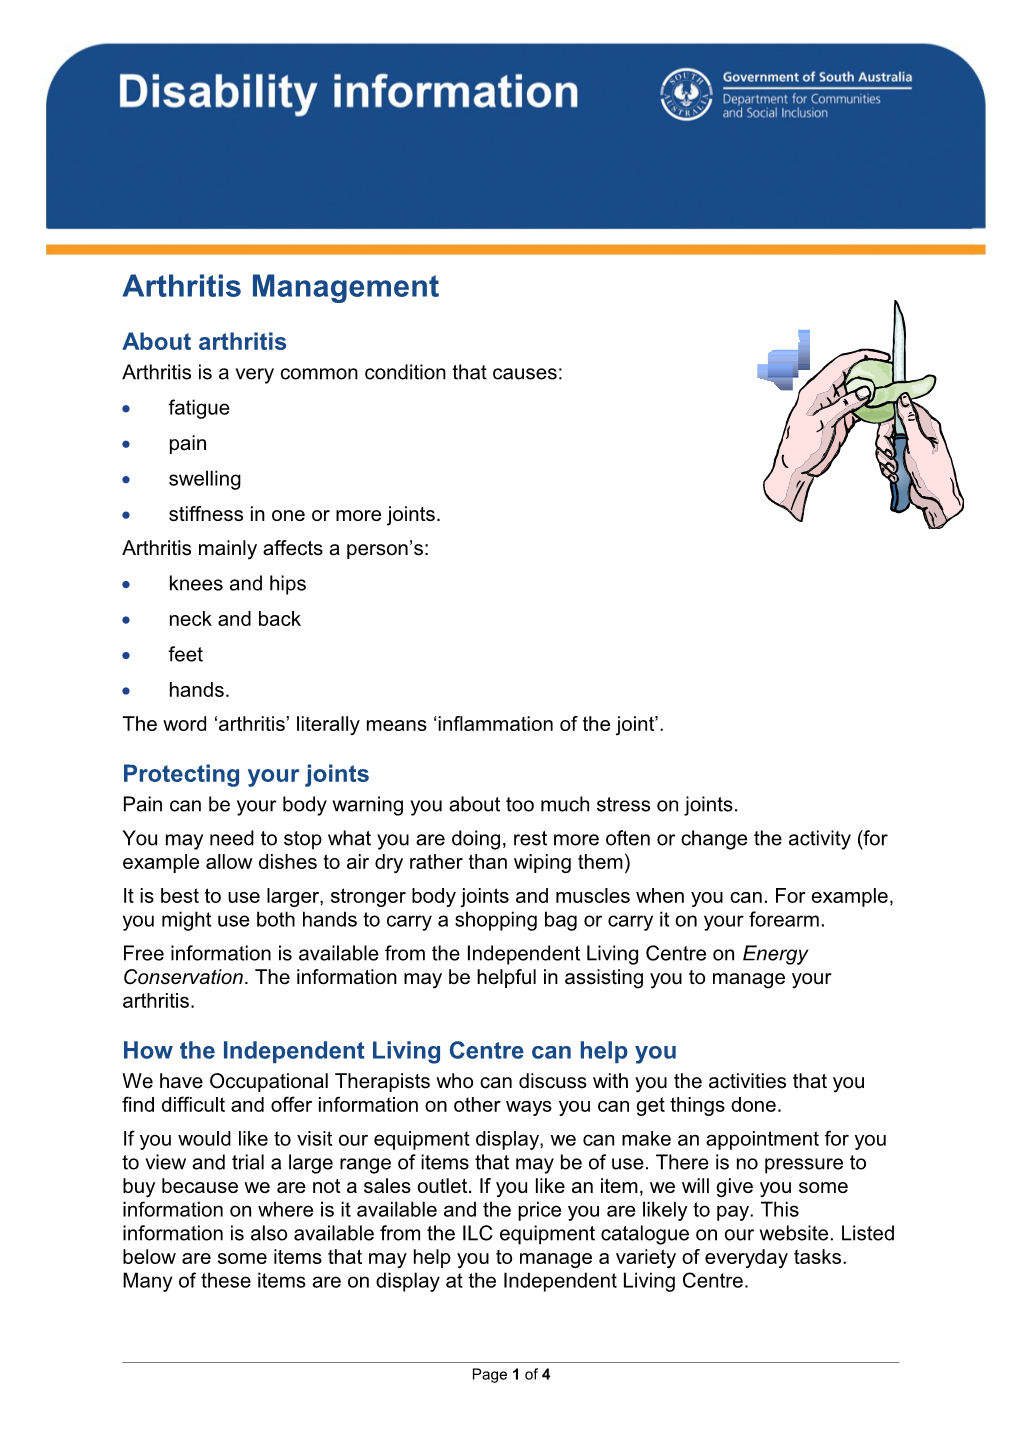 Arthritis Management